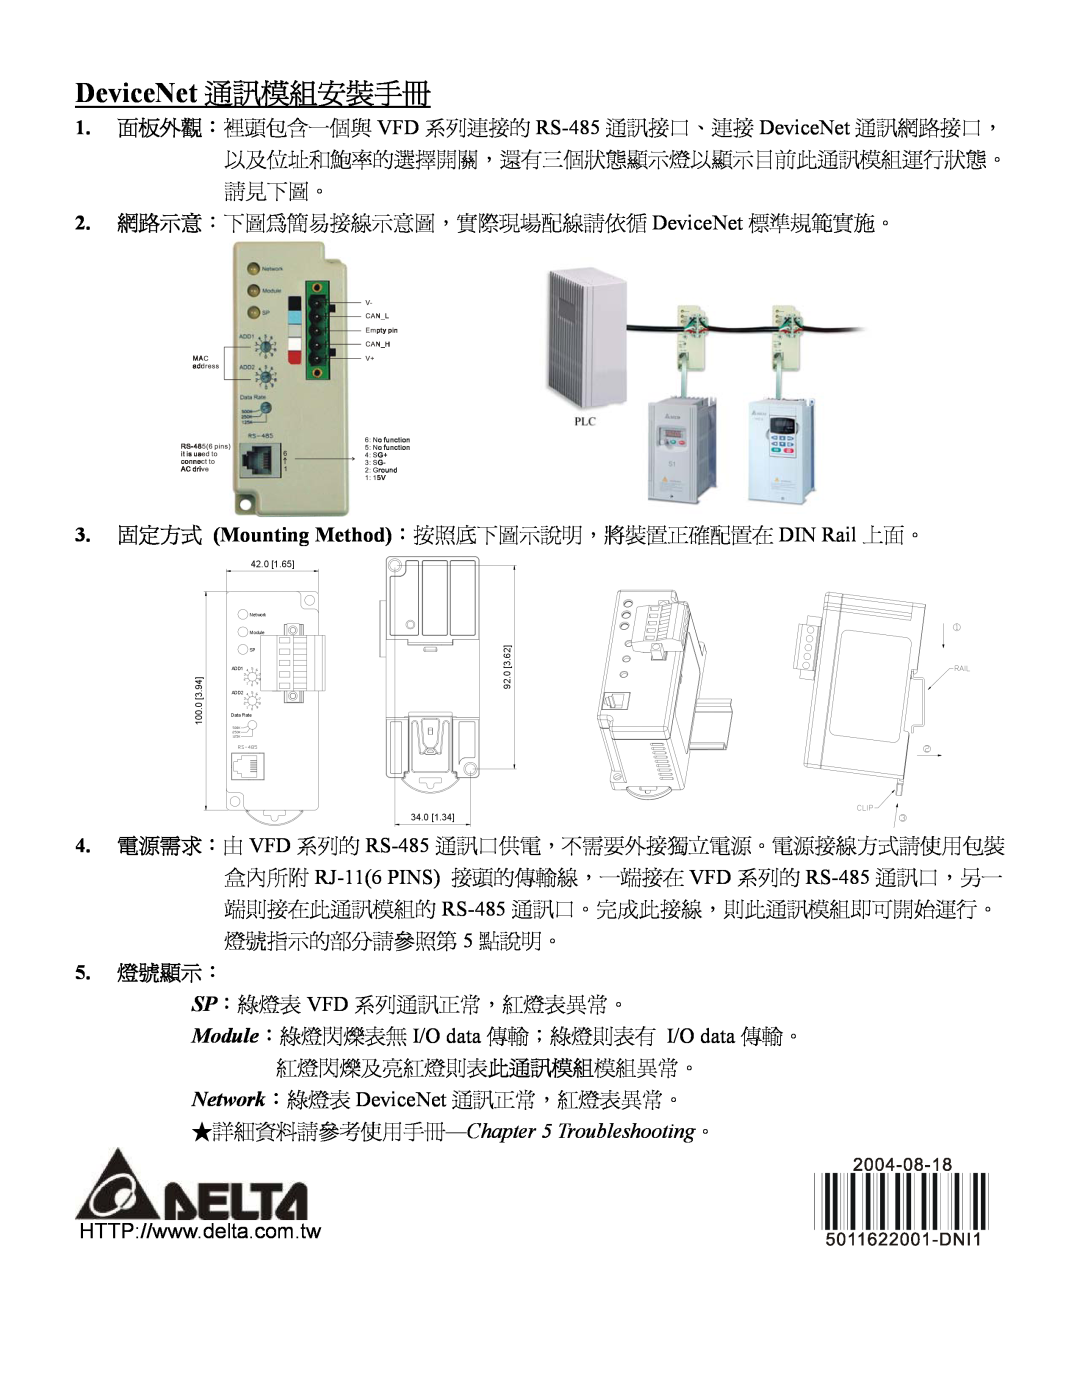 Delta Electronics DN02 instruction sheet DeviceNet 通訊模組安裝手冊, 5. 燈號顯示：, 詳細資料請參考使用手冊- Troubleshooting。 